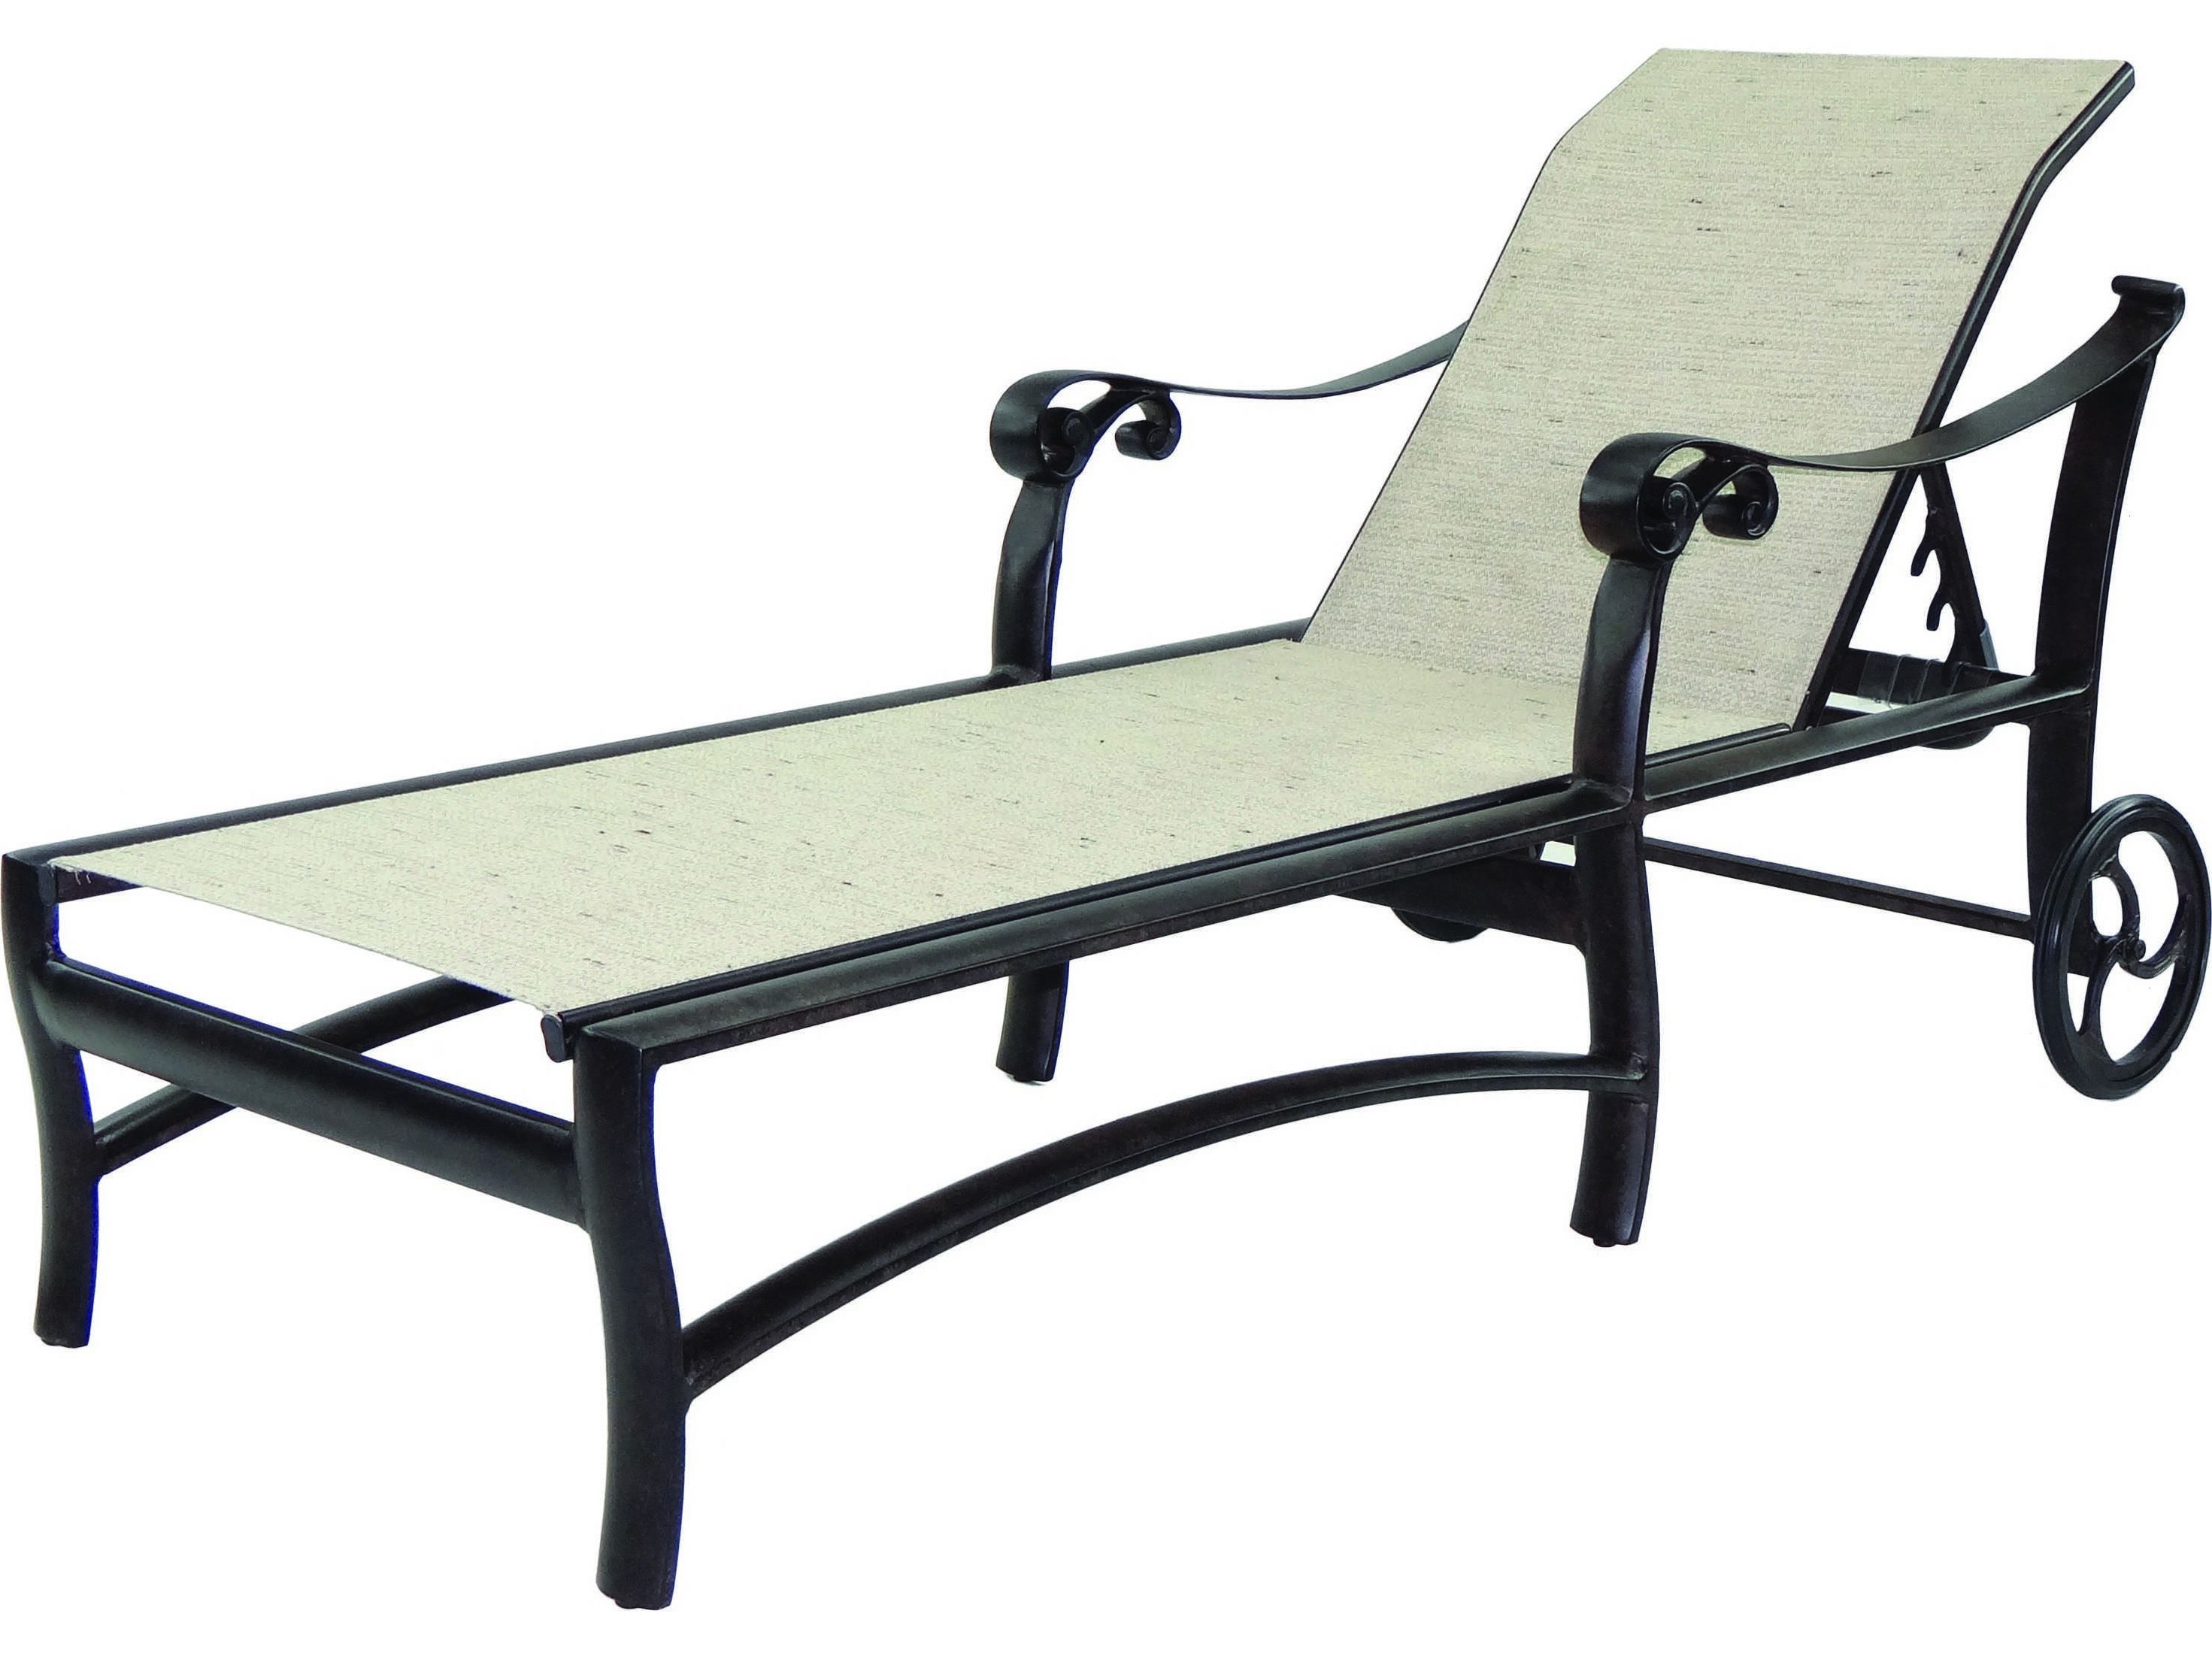 Popular Outdoor Aluminum Adjustable Chaise Lounges Regarding Castelle Bellanova Sling Cast Aluminum Adjustable Chaise Lounge With Wheels (View 15 of 25)